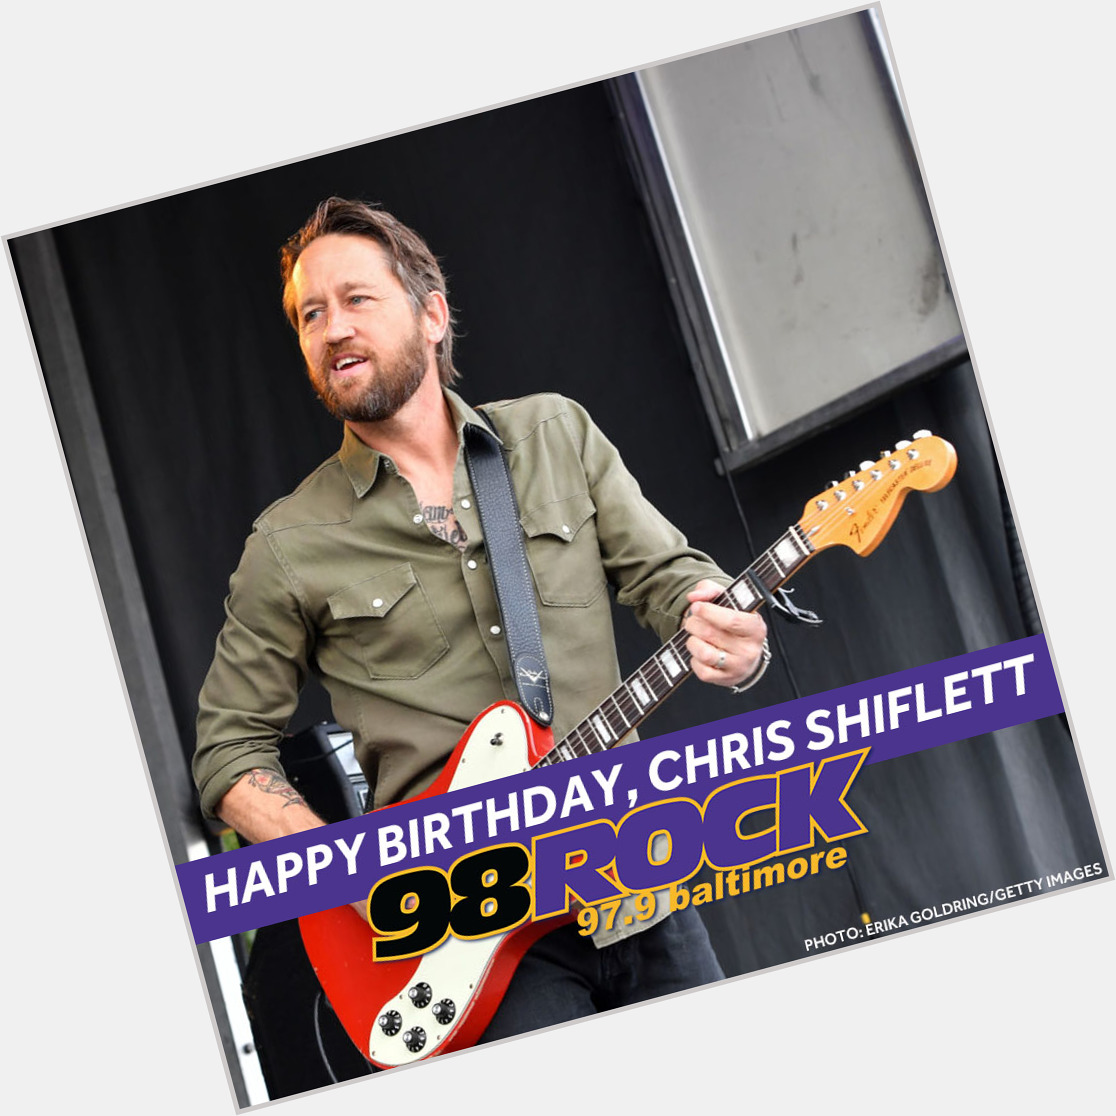 Happy Birthday to Foo Fighters axeman Chris Shiflett. Hope you have a rockin birthday, Chris!! 